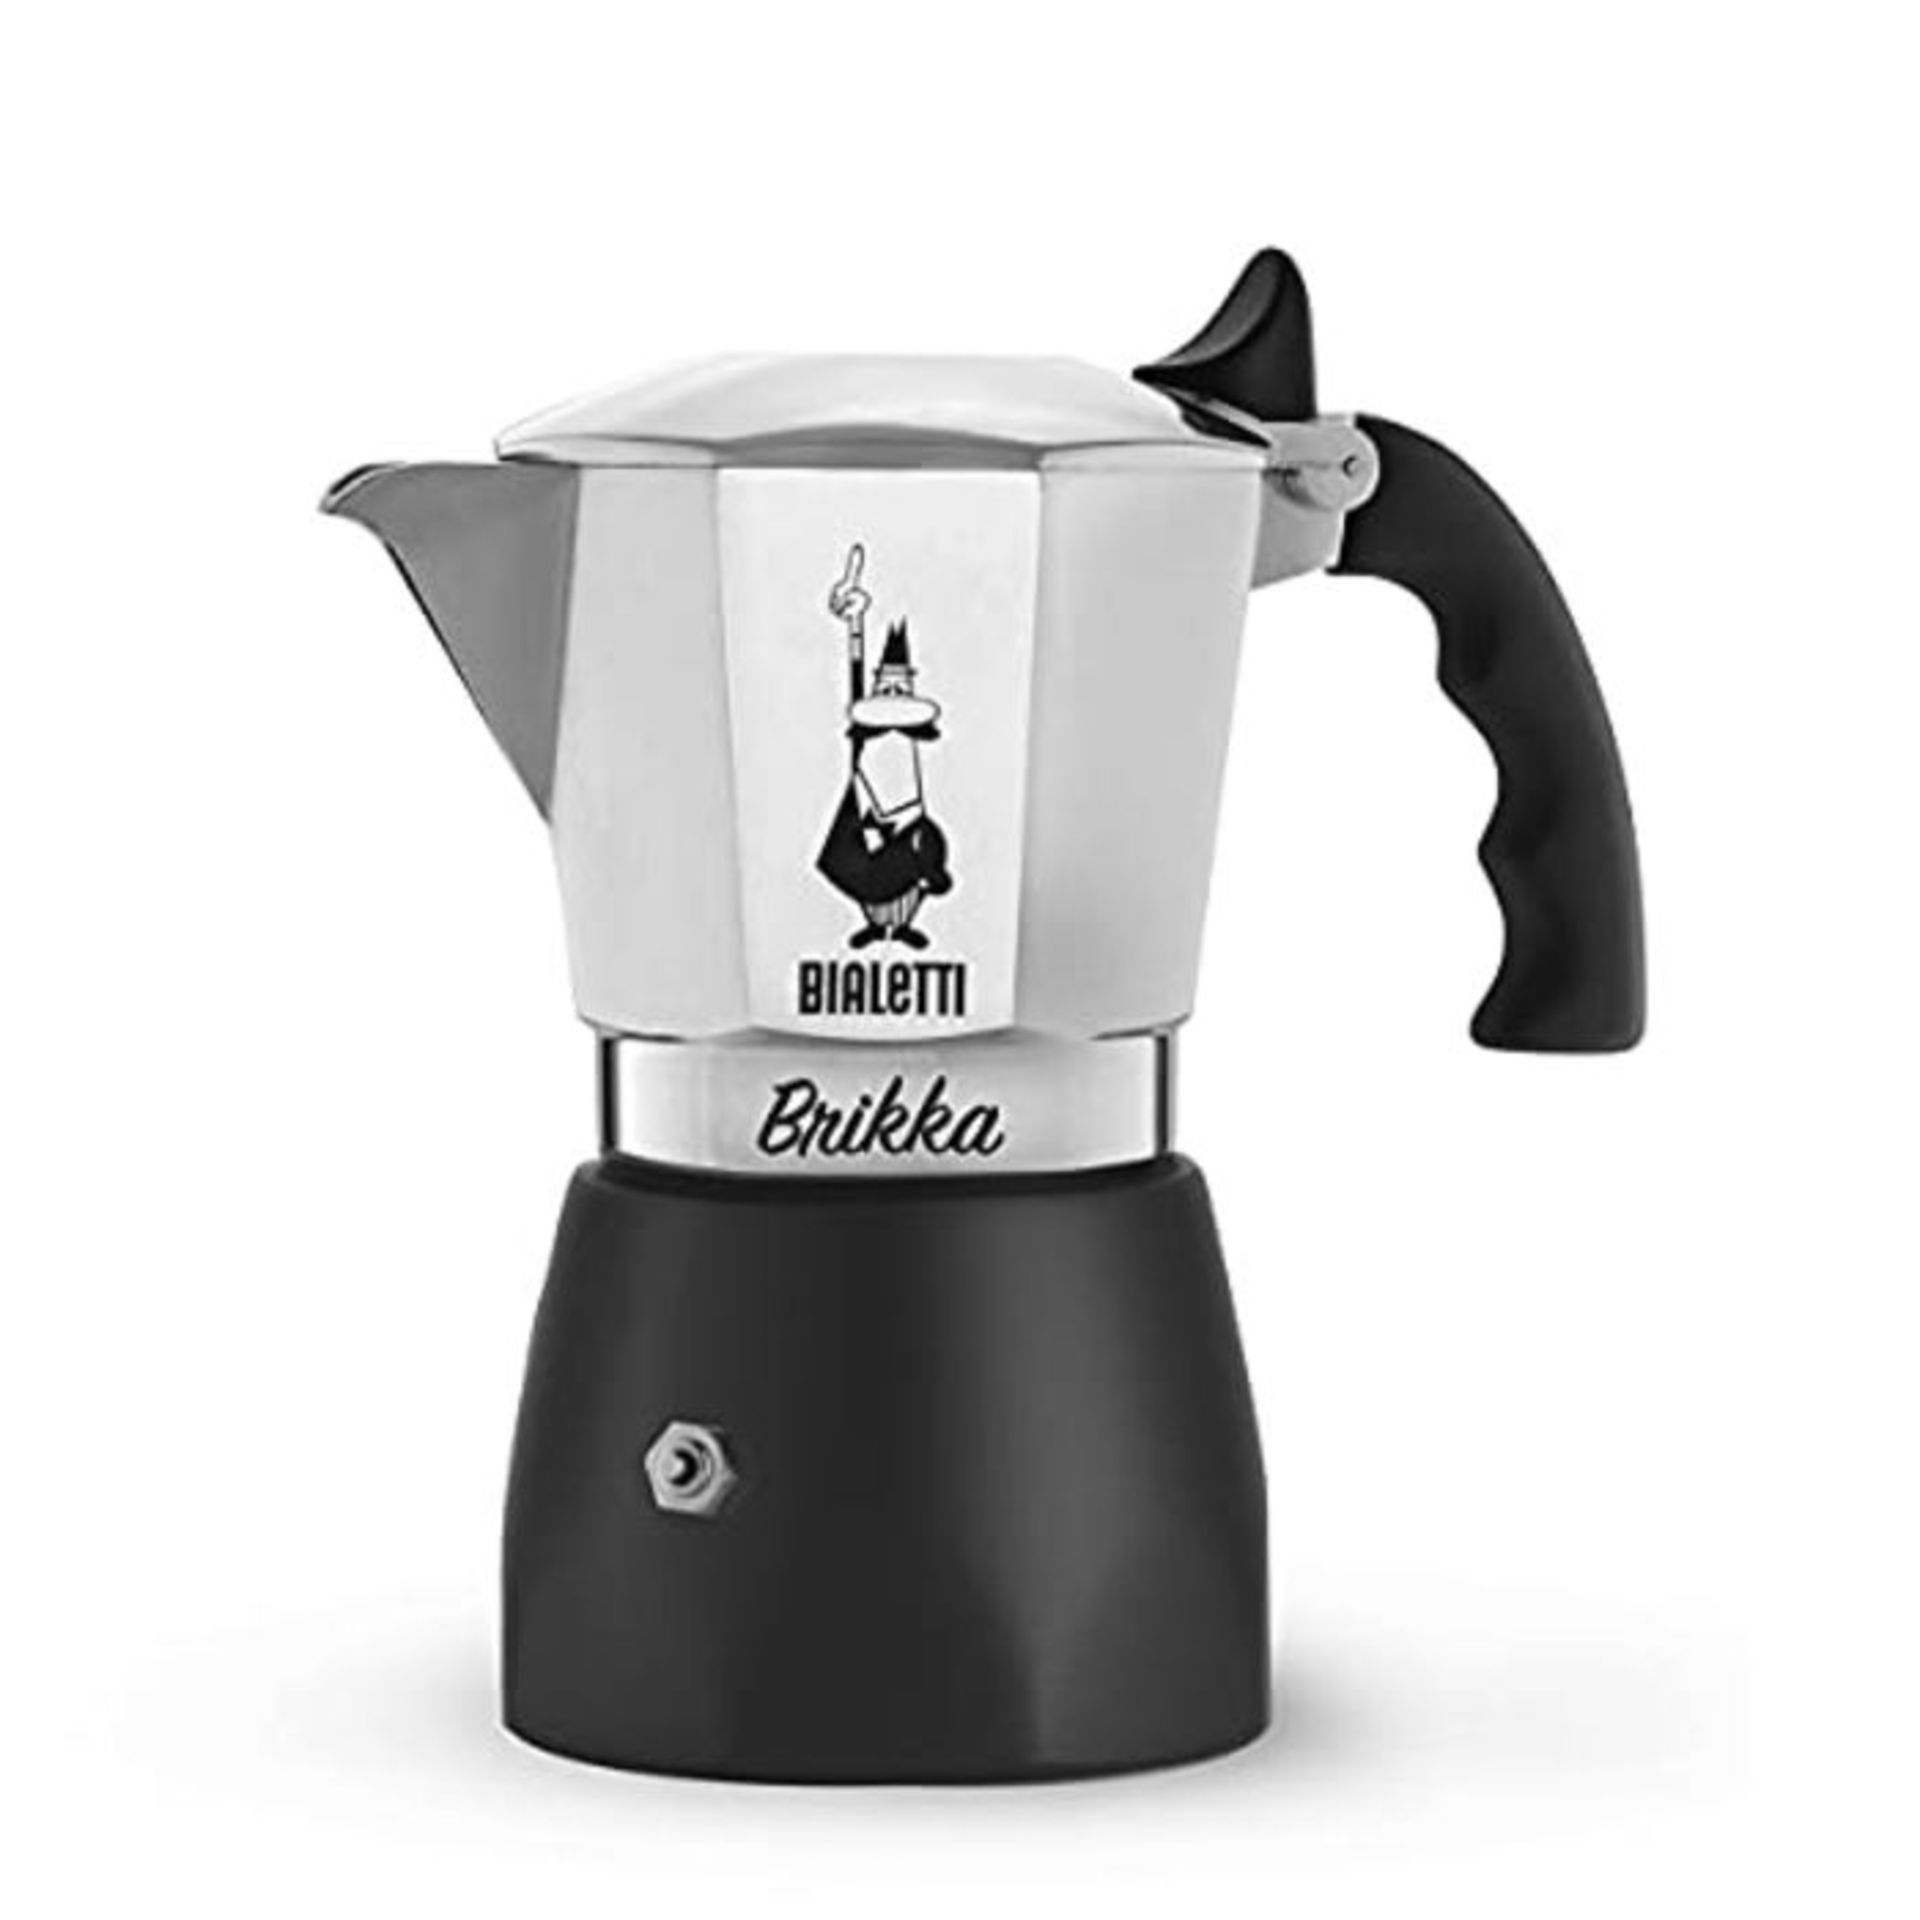 Bialetti New Brikka Aluminium Coffee Maker with Double Cream 4 Cups